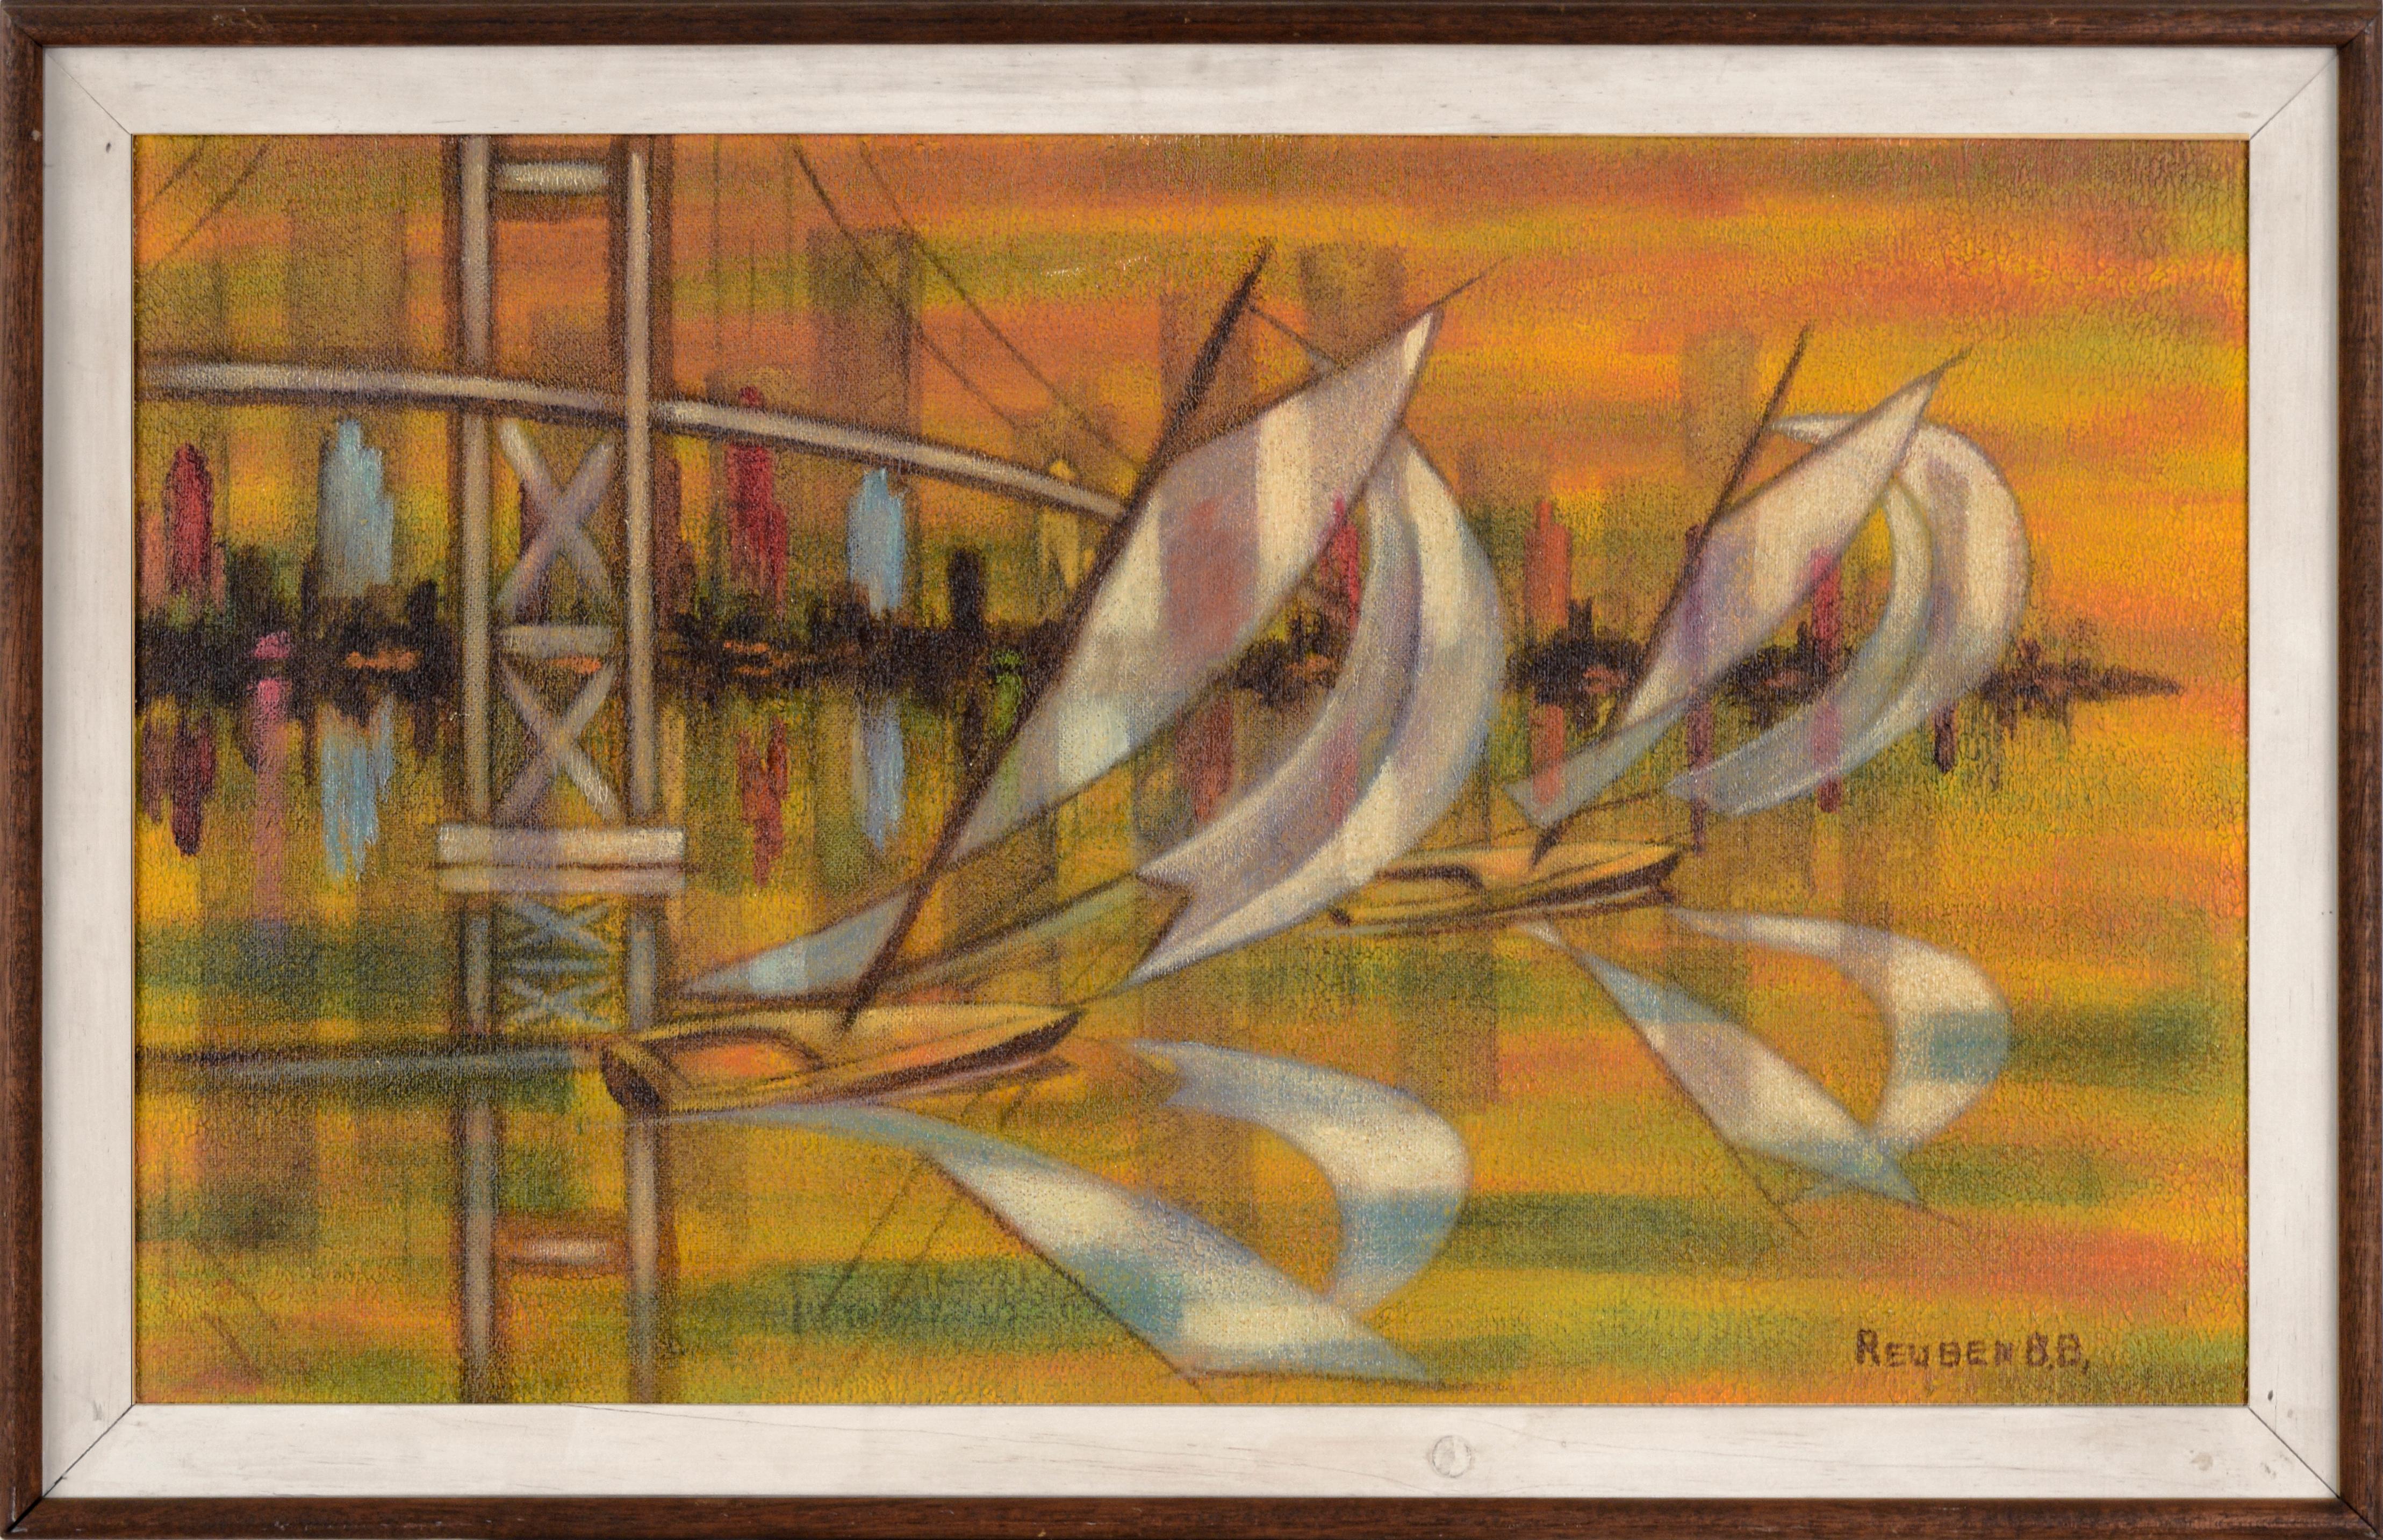 Reuben B.B. Landscape Painting - Sailing on San Francisco Bay - Golden Gate Bridge - Oil on Masonite - Modernism